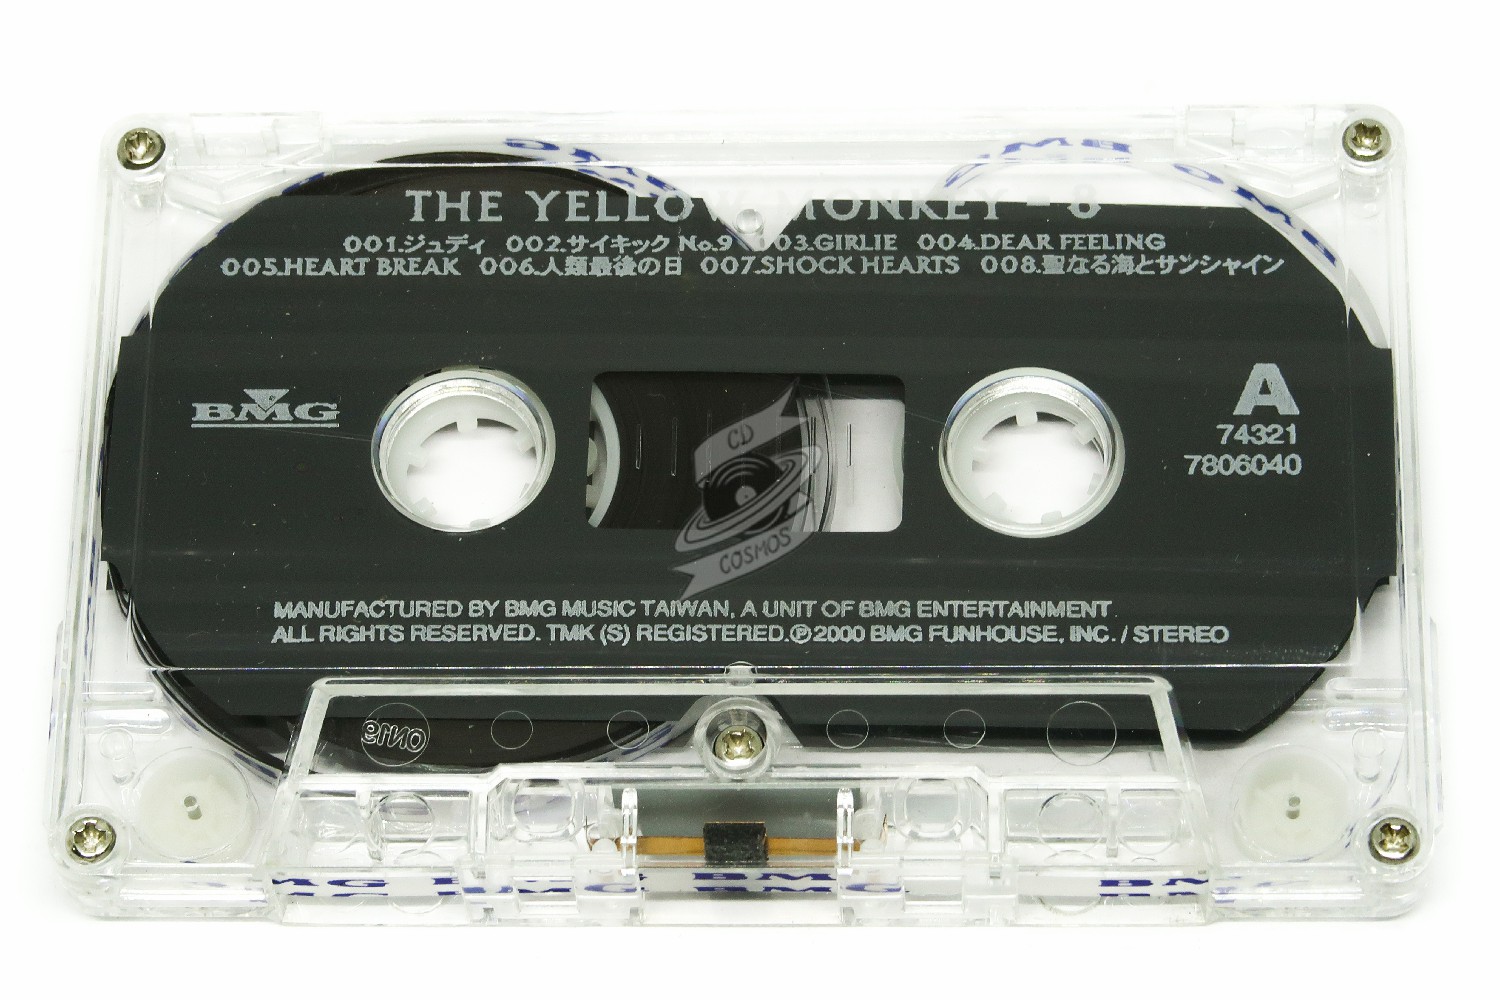 The Yellow Monkey - 8